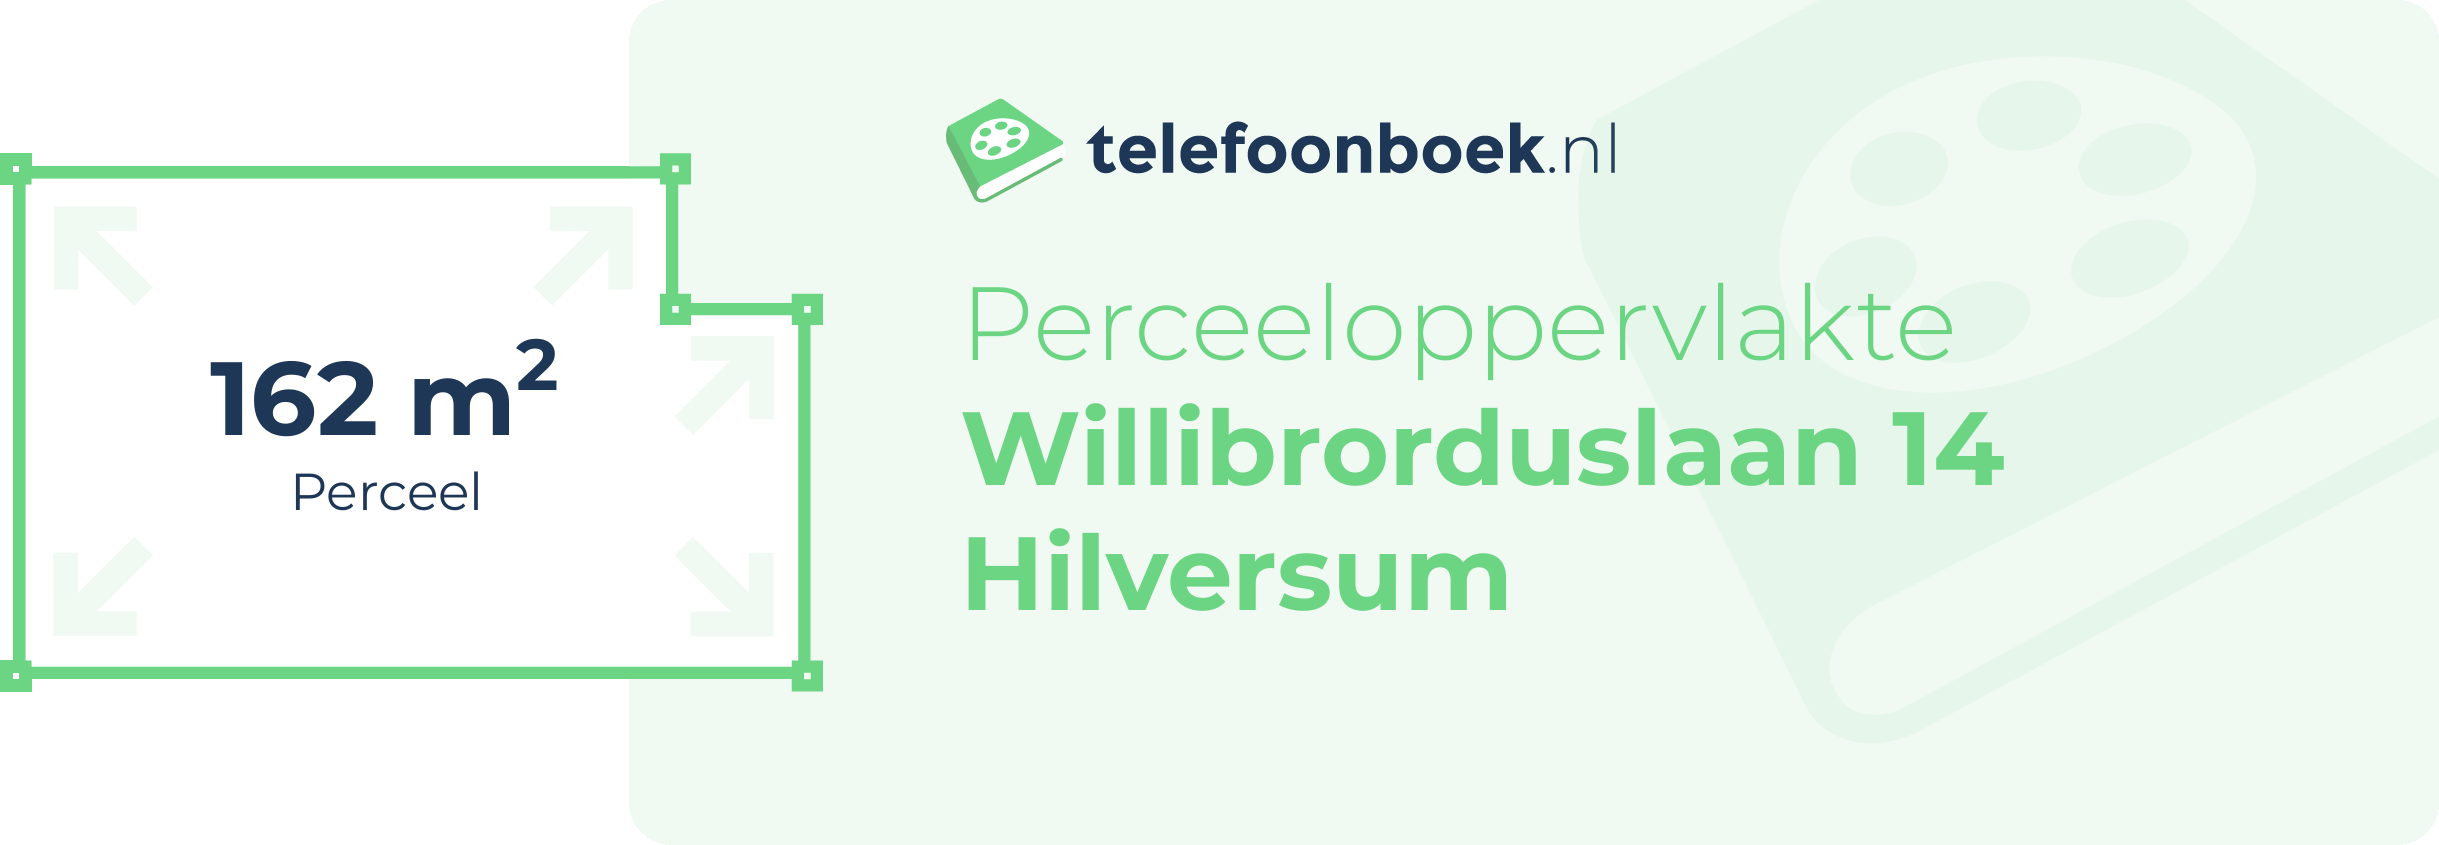 Perceeloppervlakte Willibrorduslaan 14 Hilversum